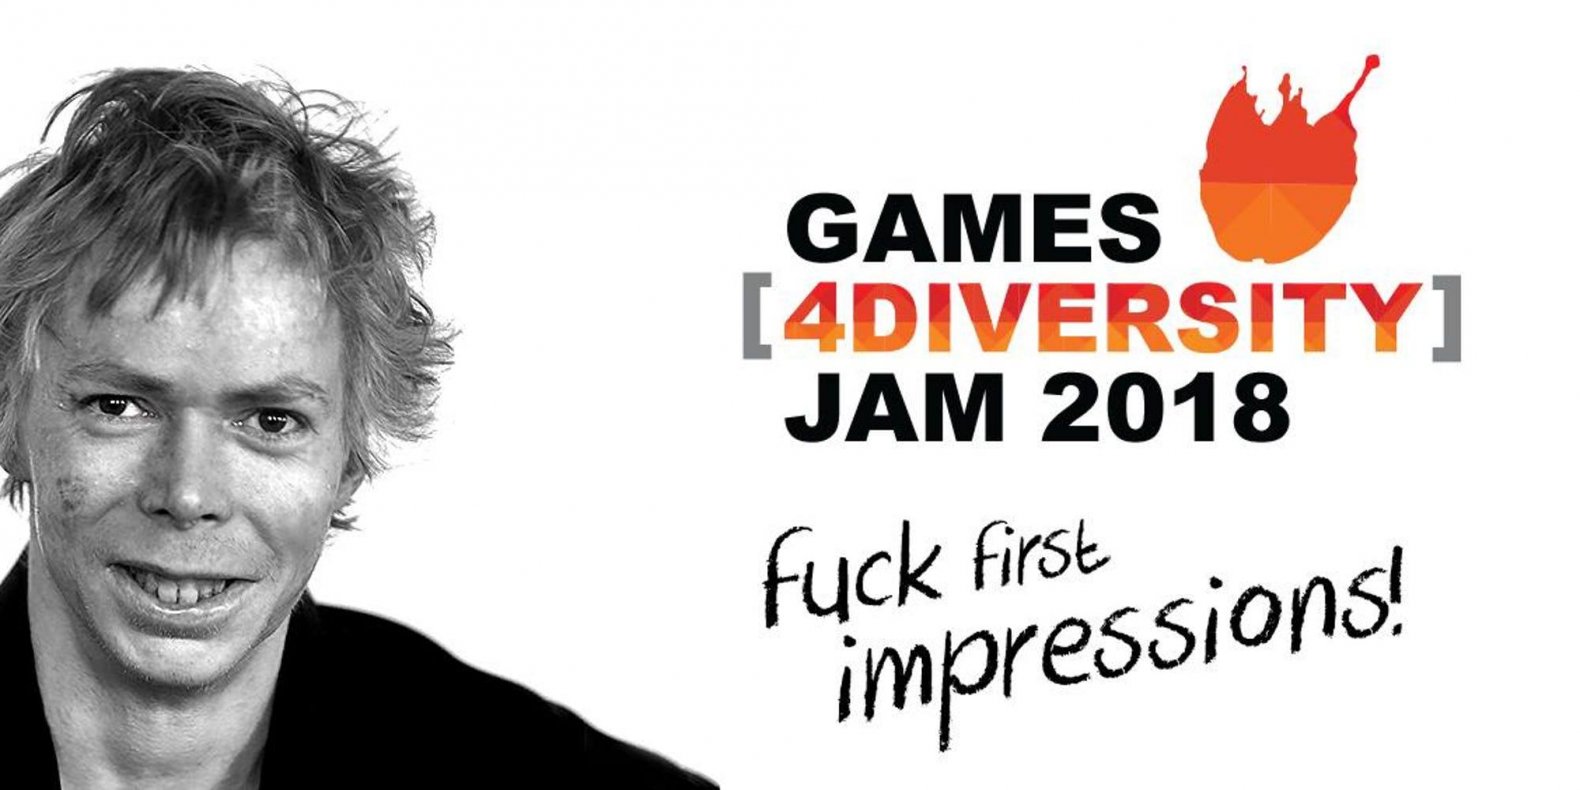 Games [4Diversity] Jam 2018